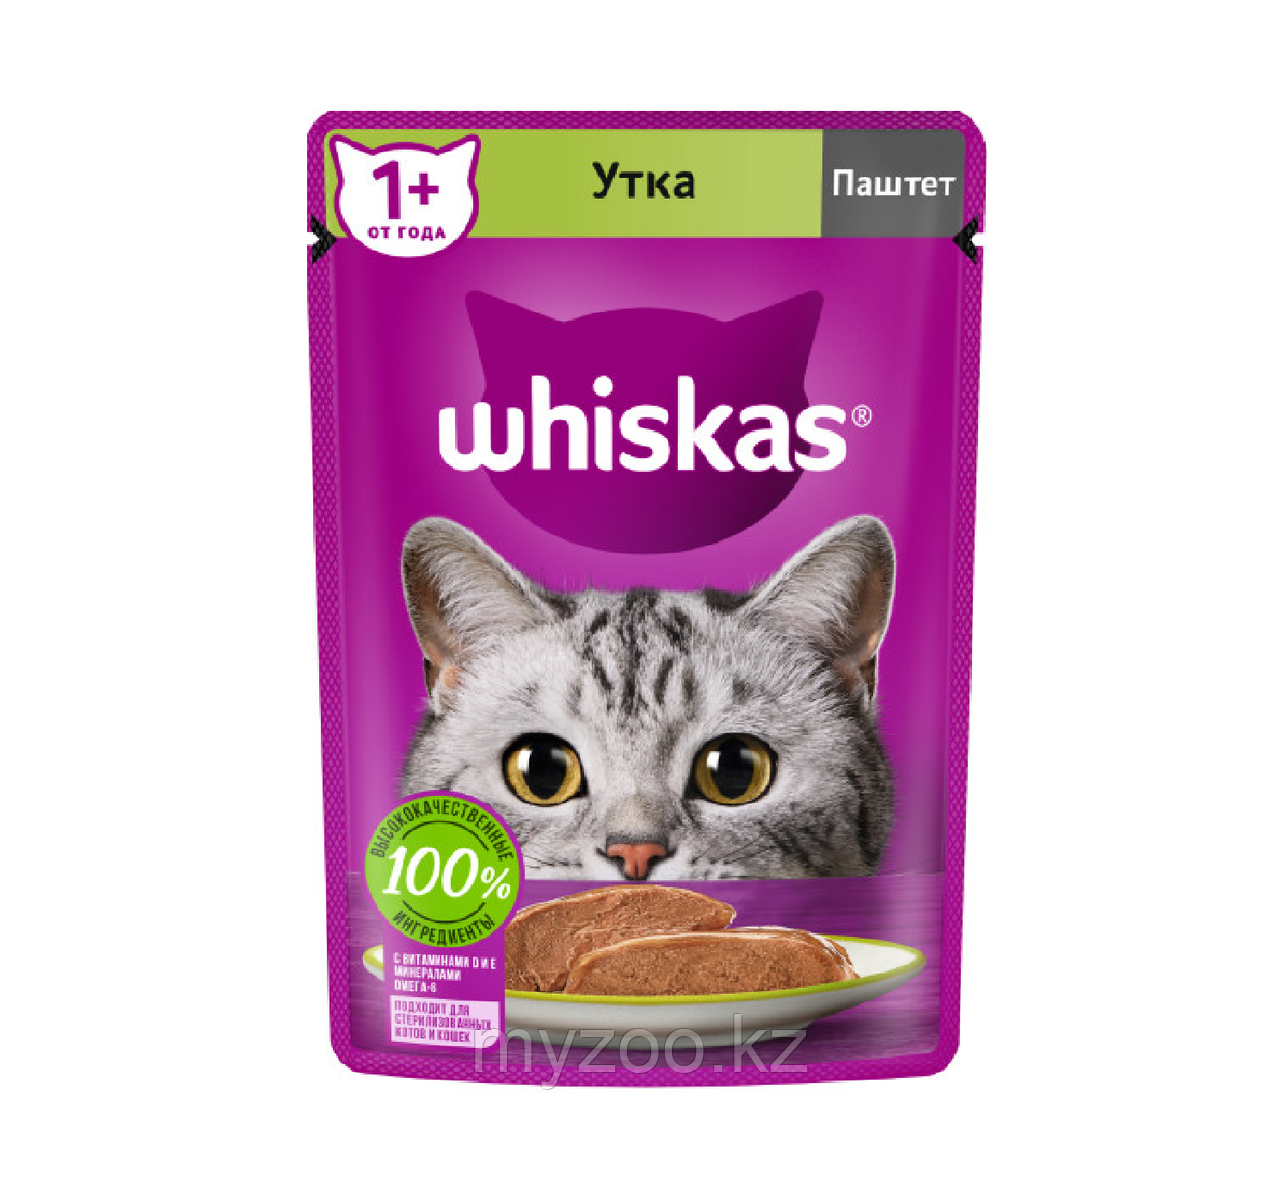 Whiskas пауч для кошек паштет с уткой, 75 гр